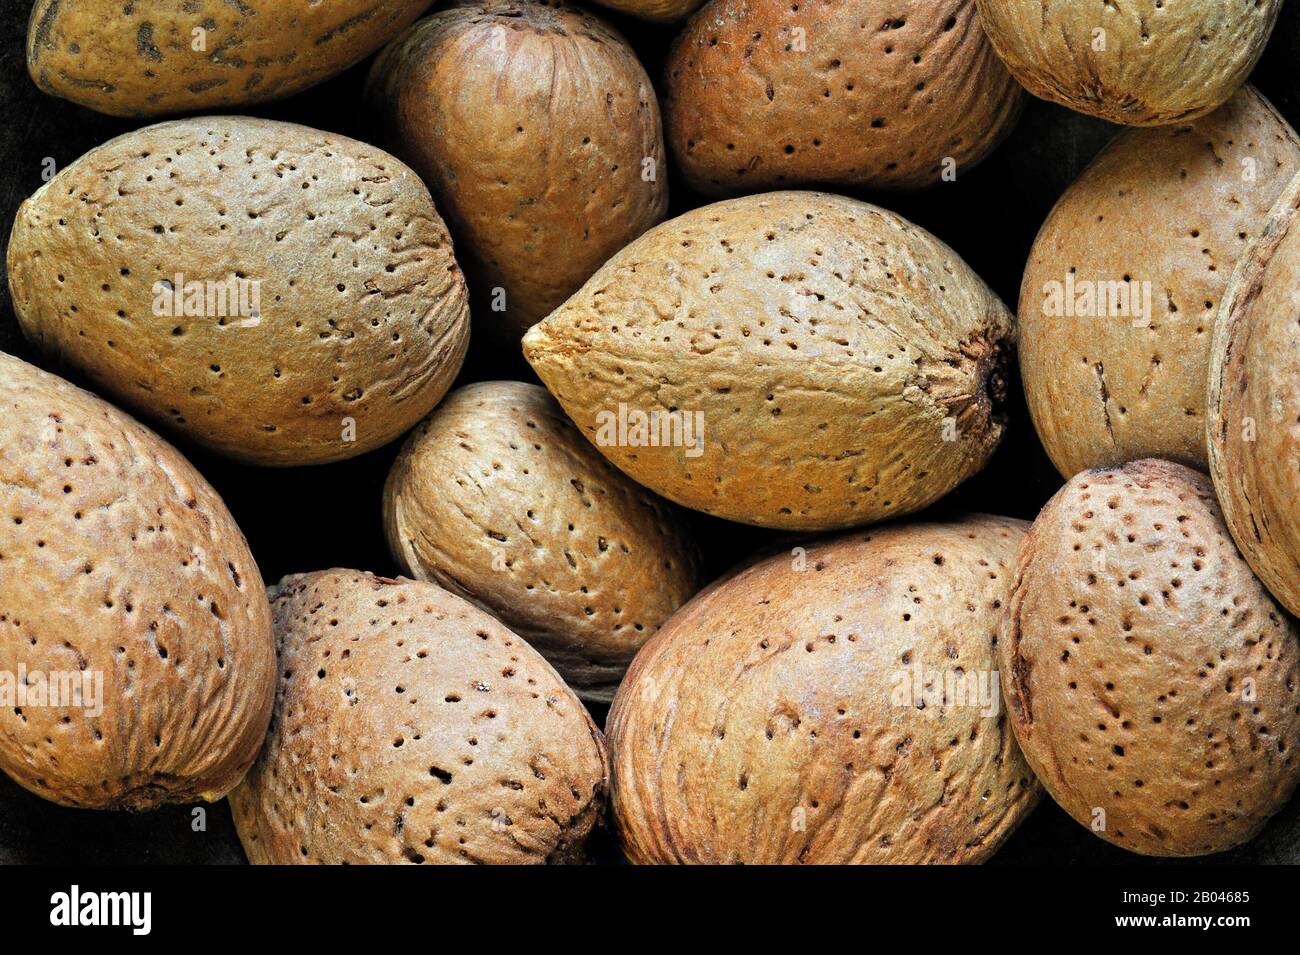 Harvested unshelled almond nuts (Prunus dulcis / Prunus amygdalus) in shell / seedcoat Stock Photo